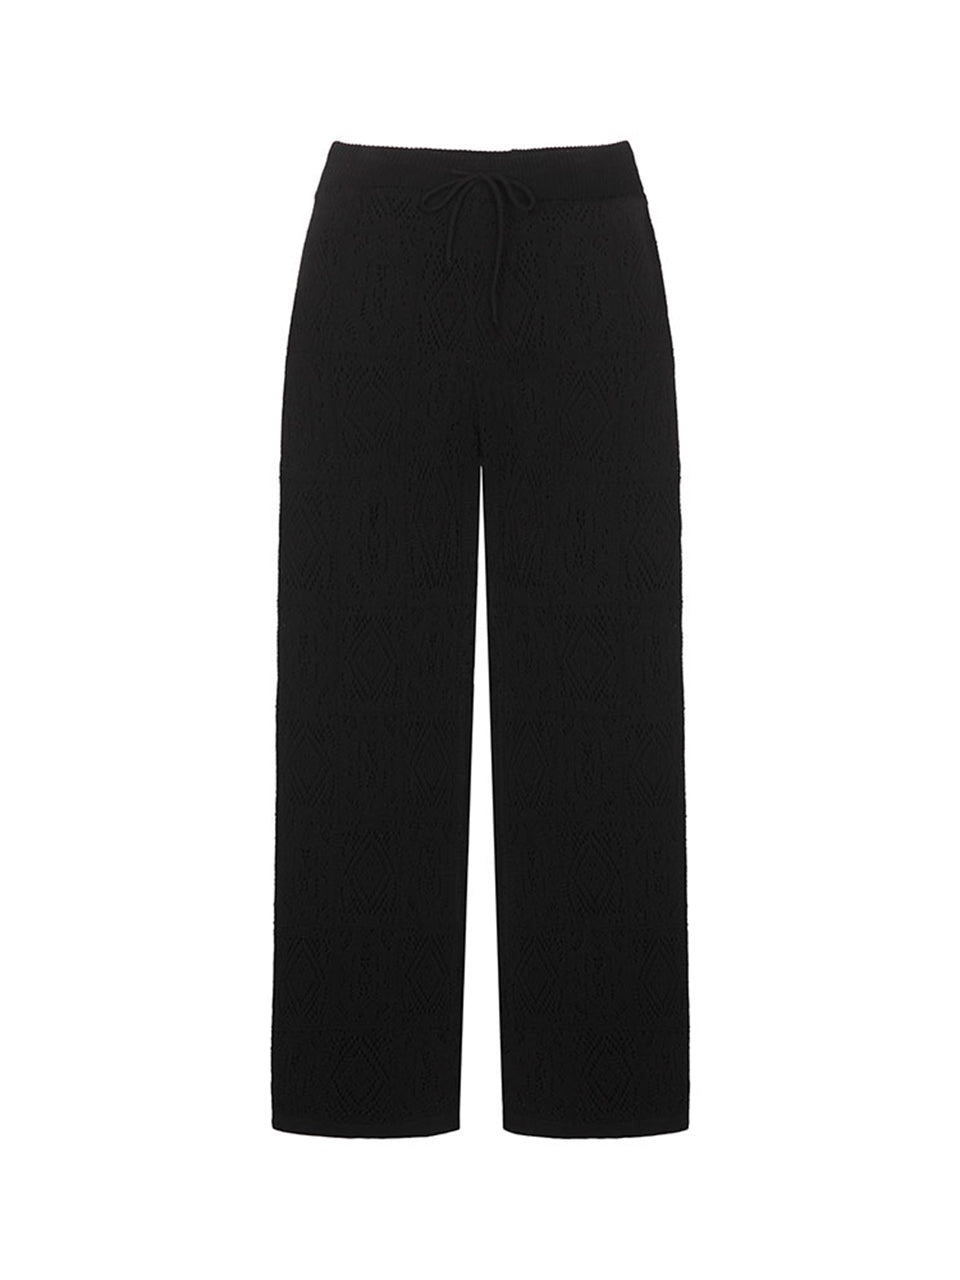 Lace Knit Pants in Black